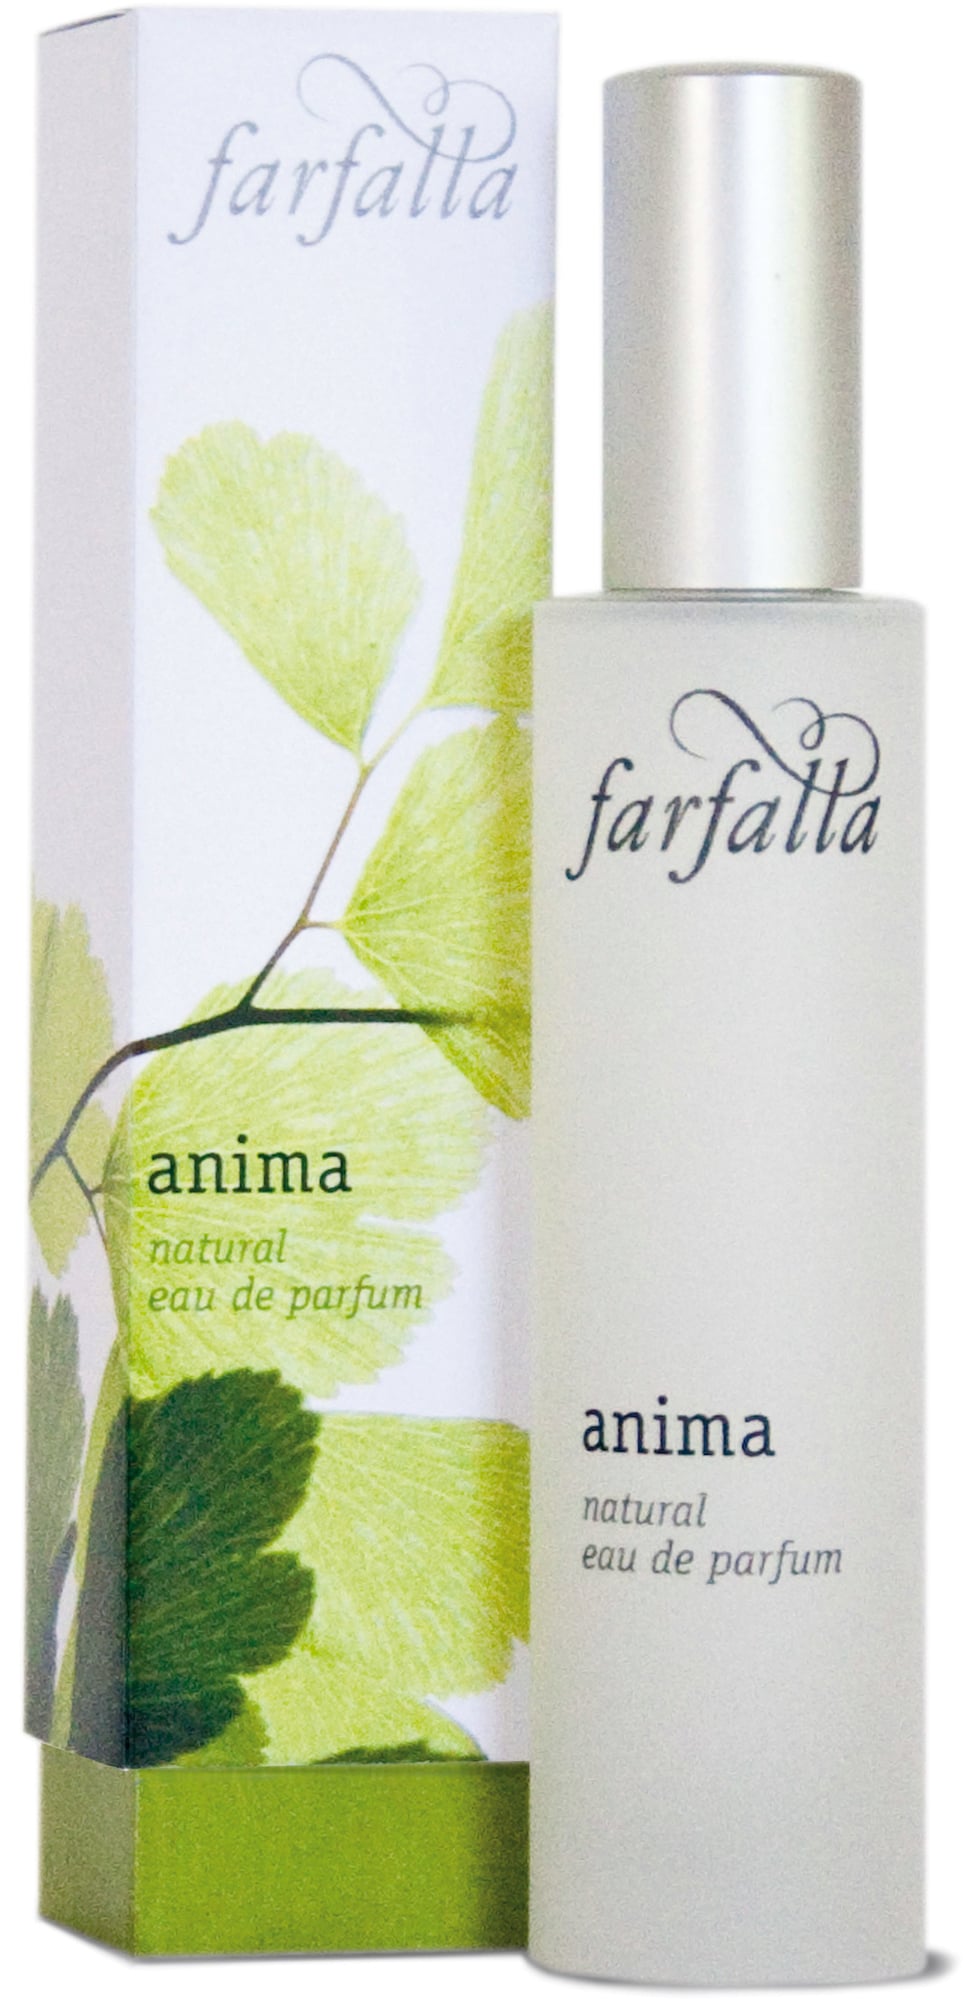 Farfalla Anima Natural Eau de Parfum - 50 ml